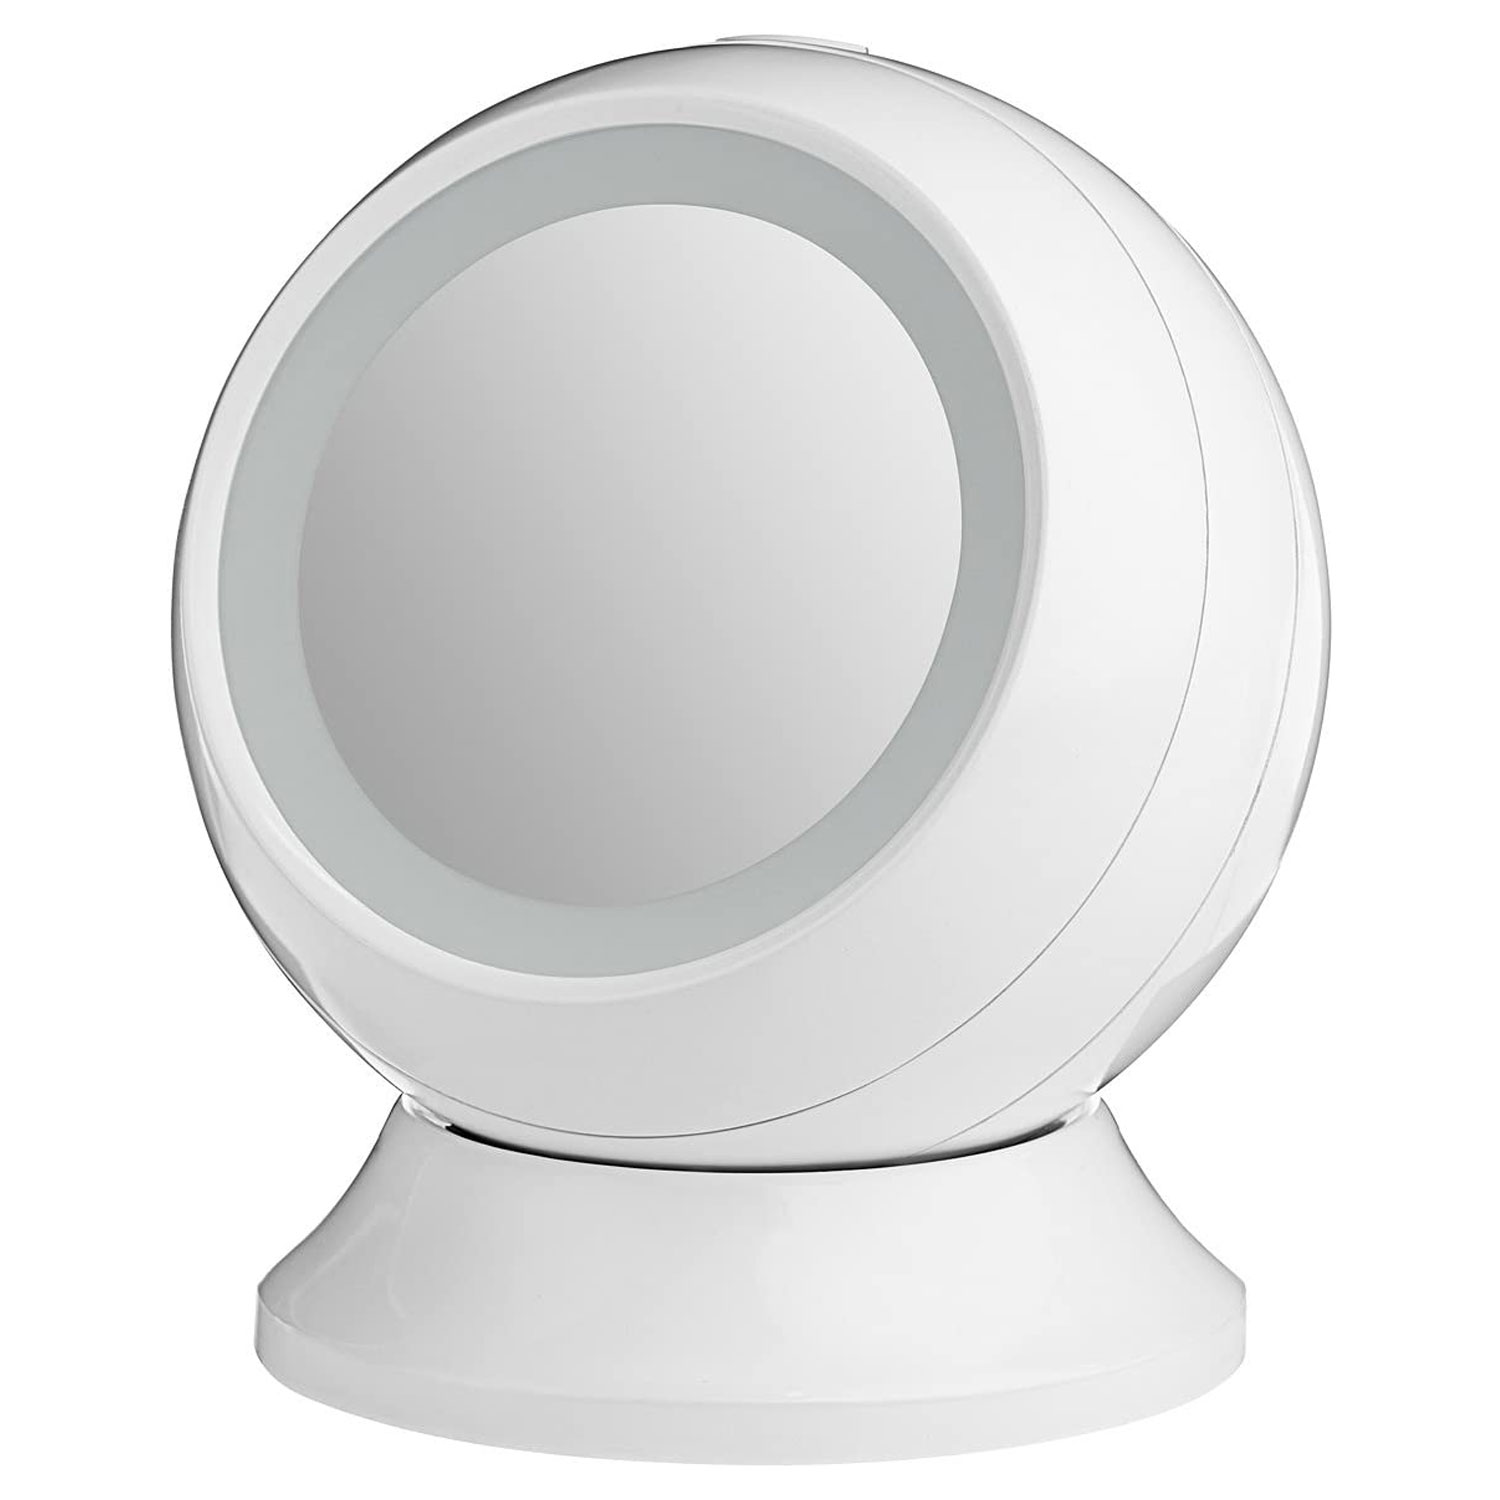 Conair - Incandescent lighting mirror with storage